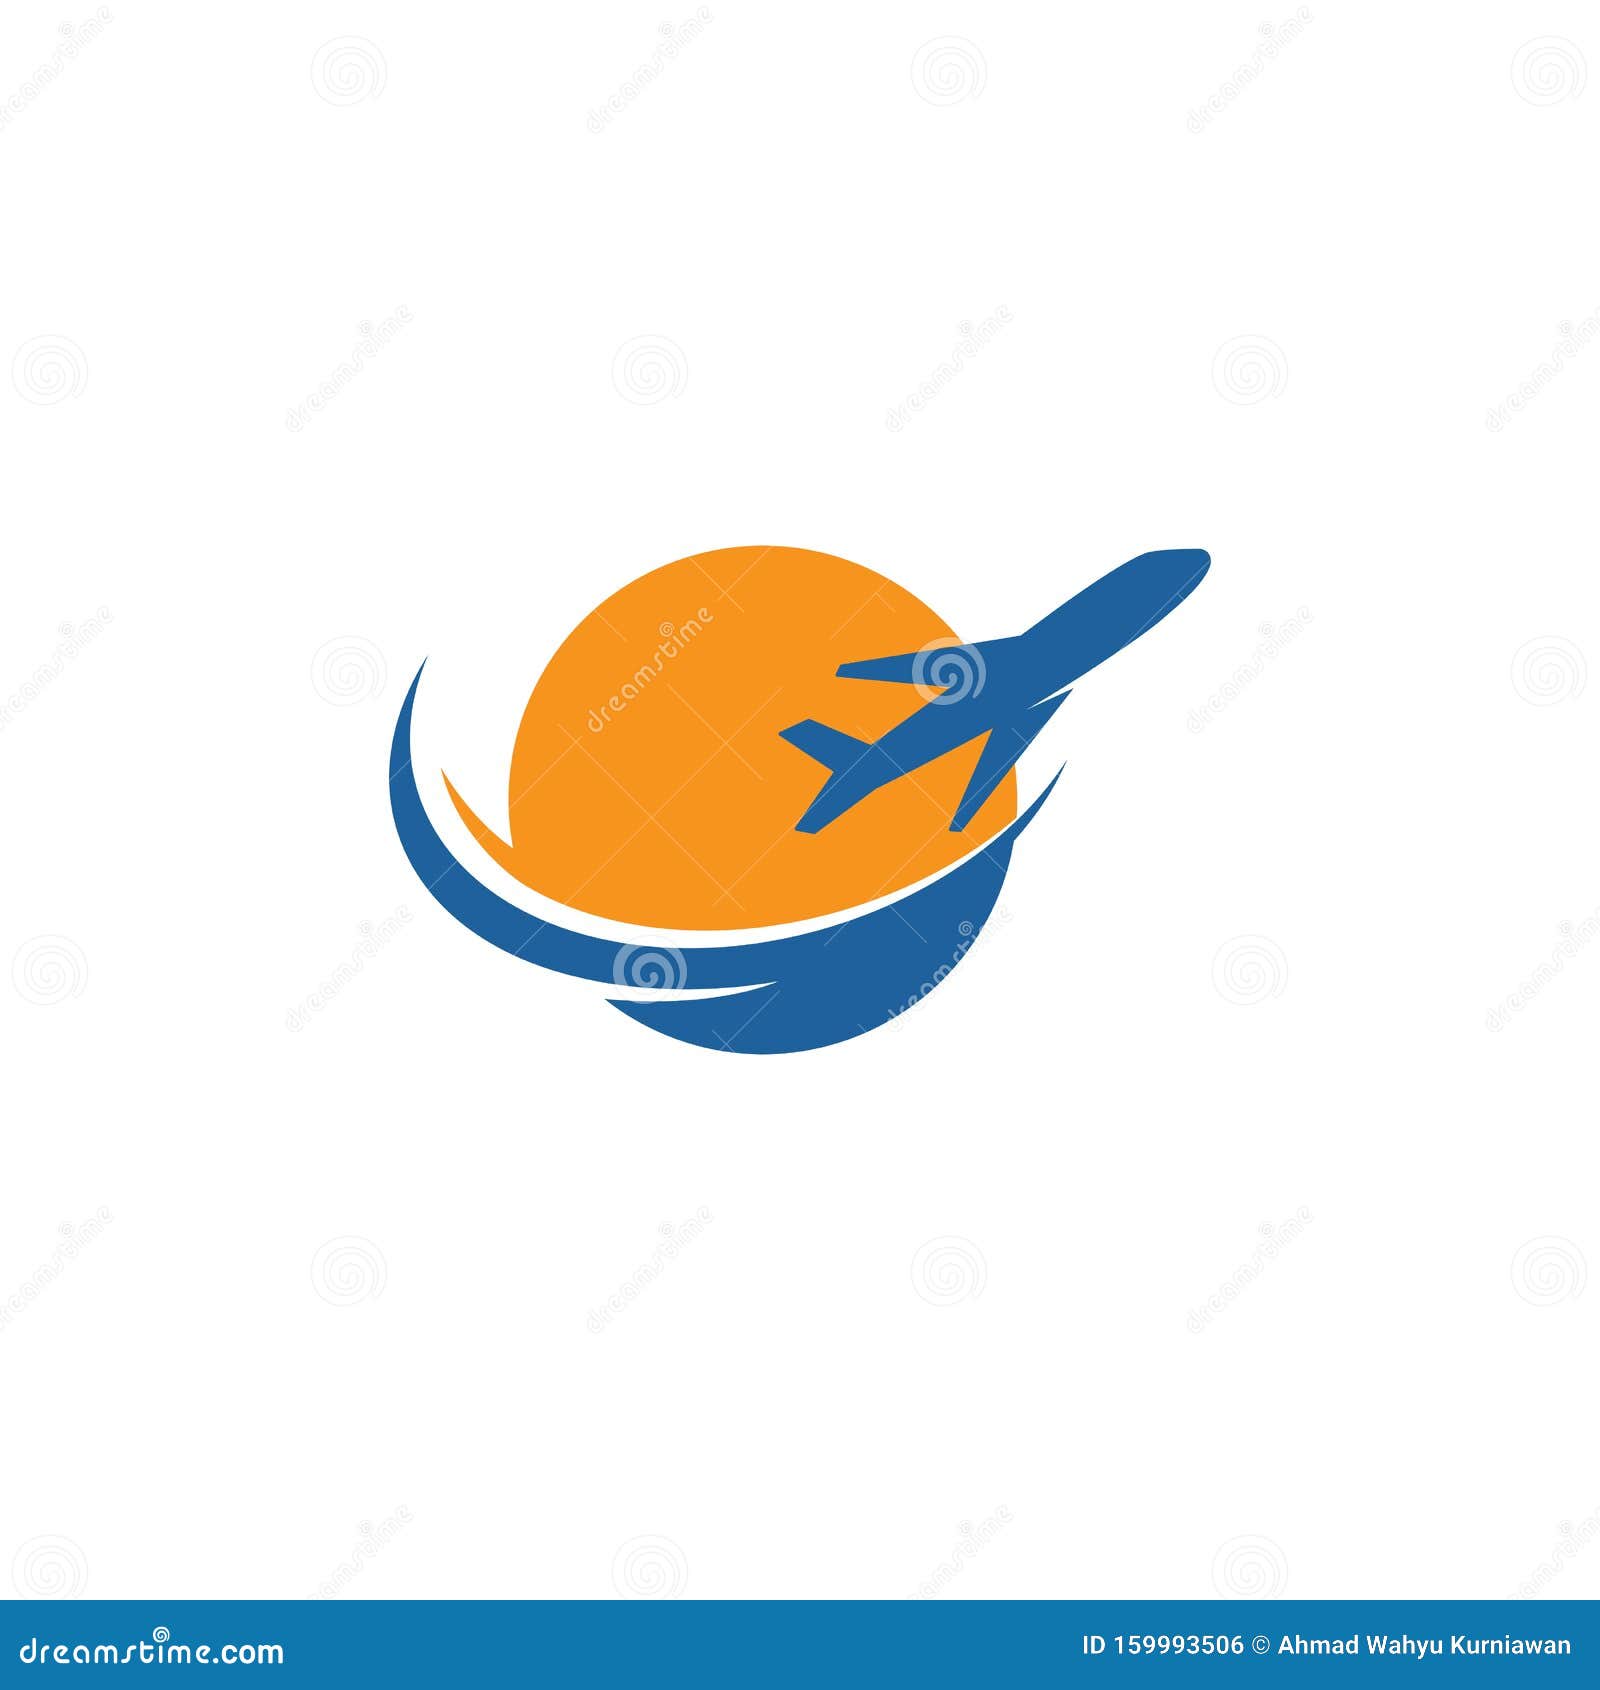 Design logo travel plane flight Royalty Free Vector Image